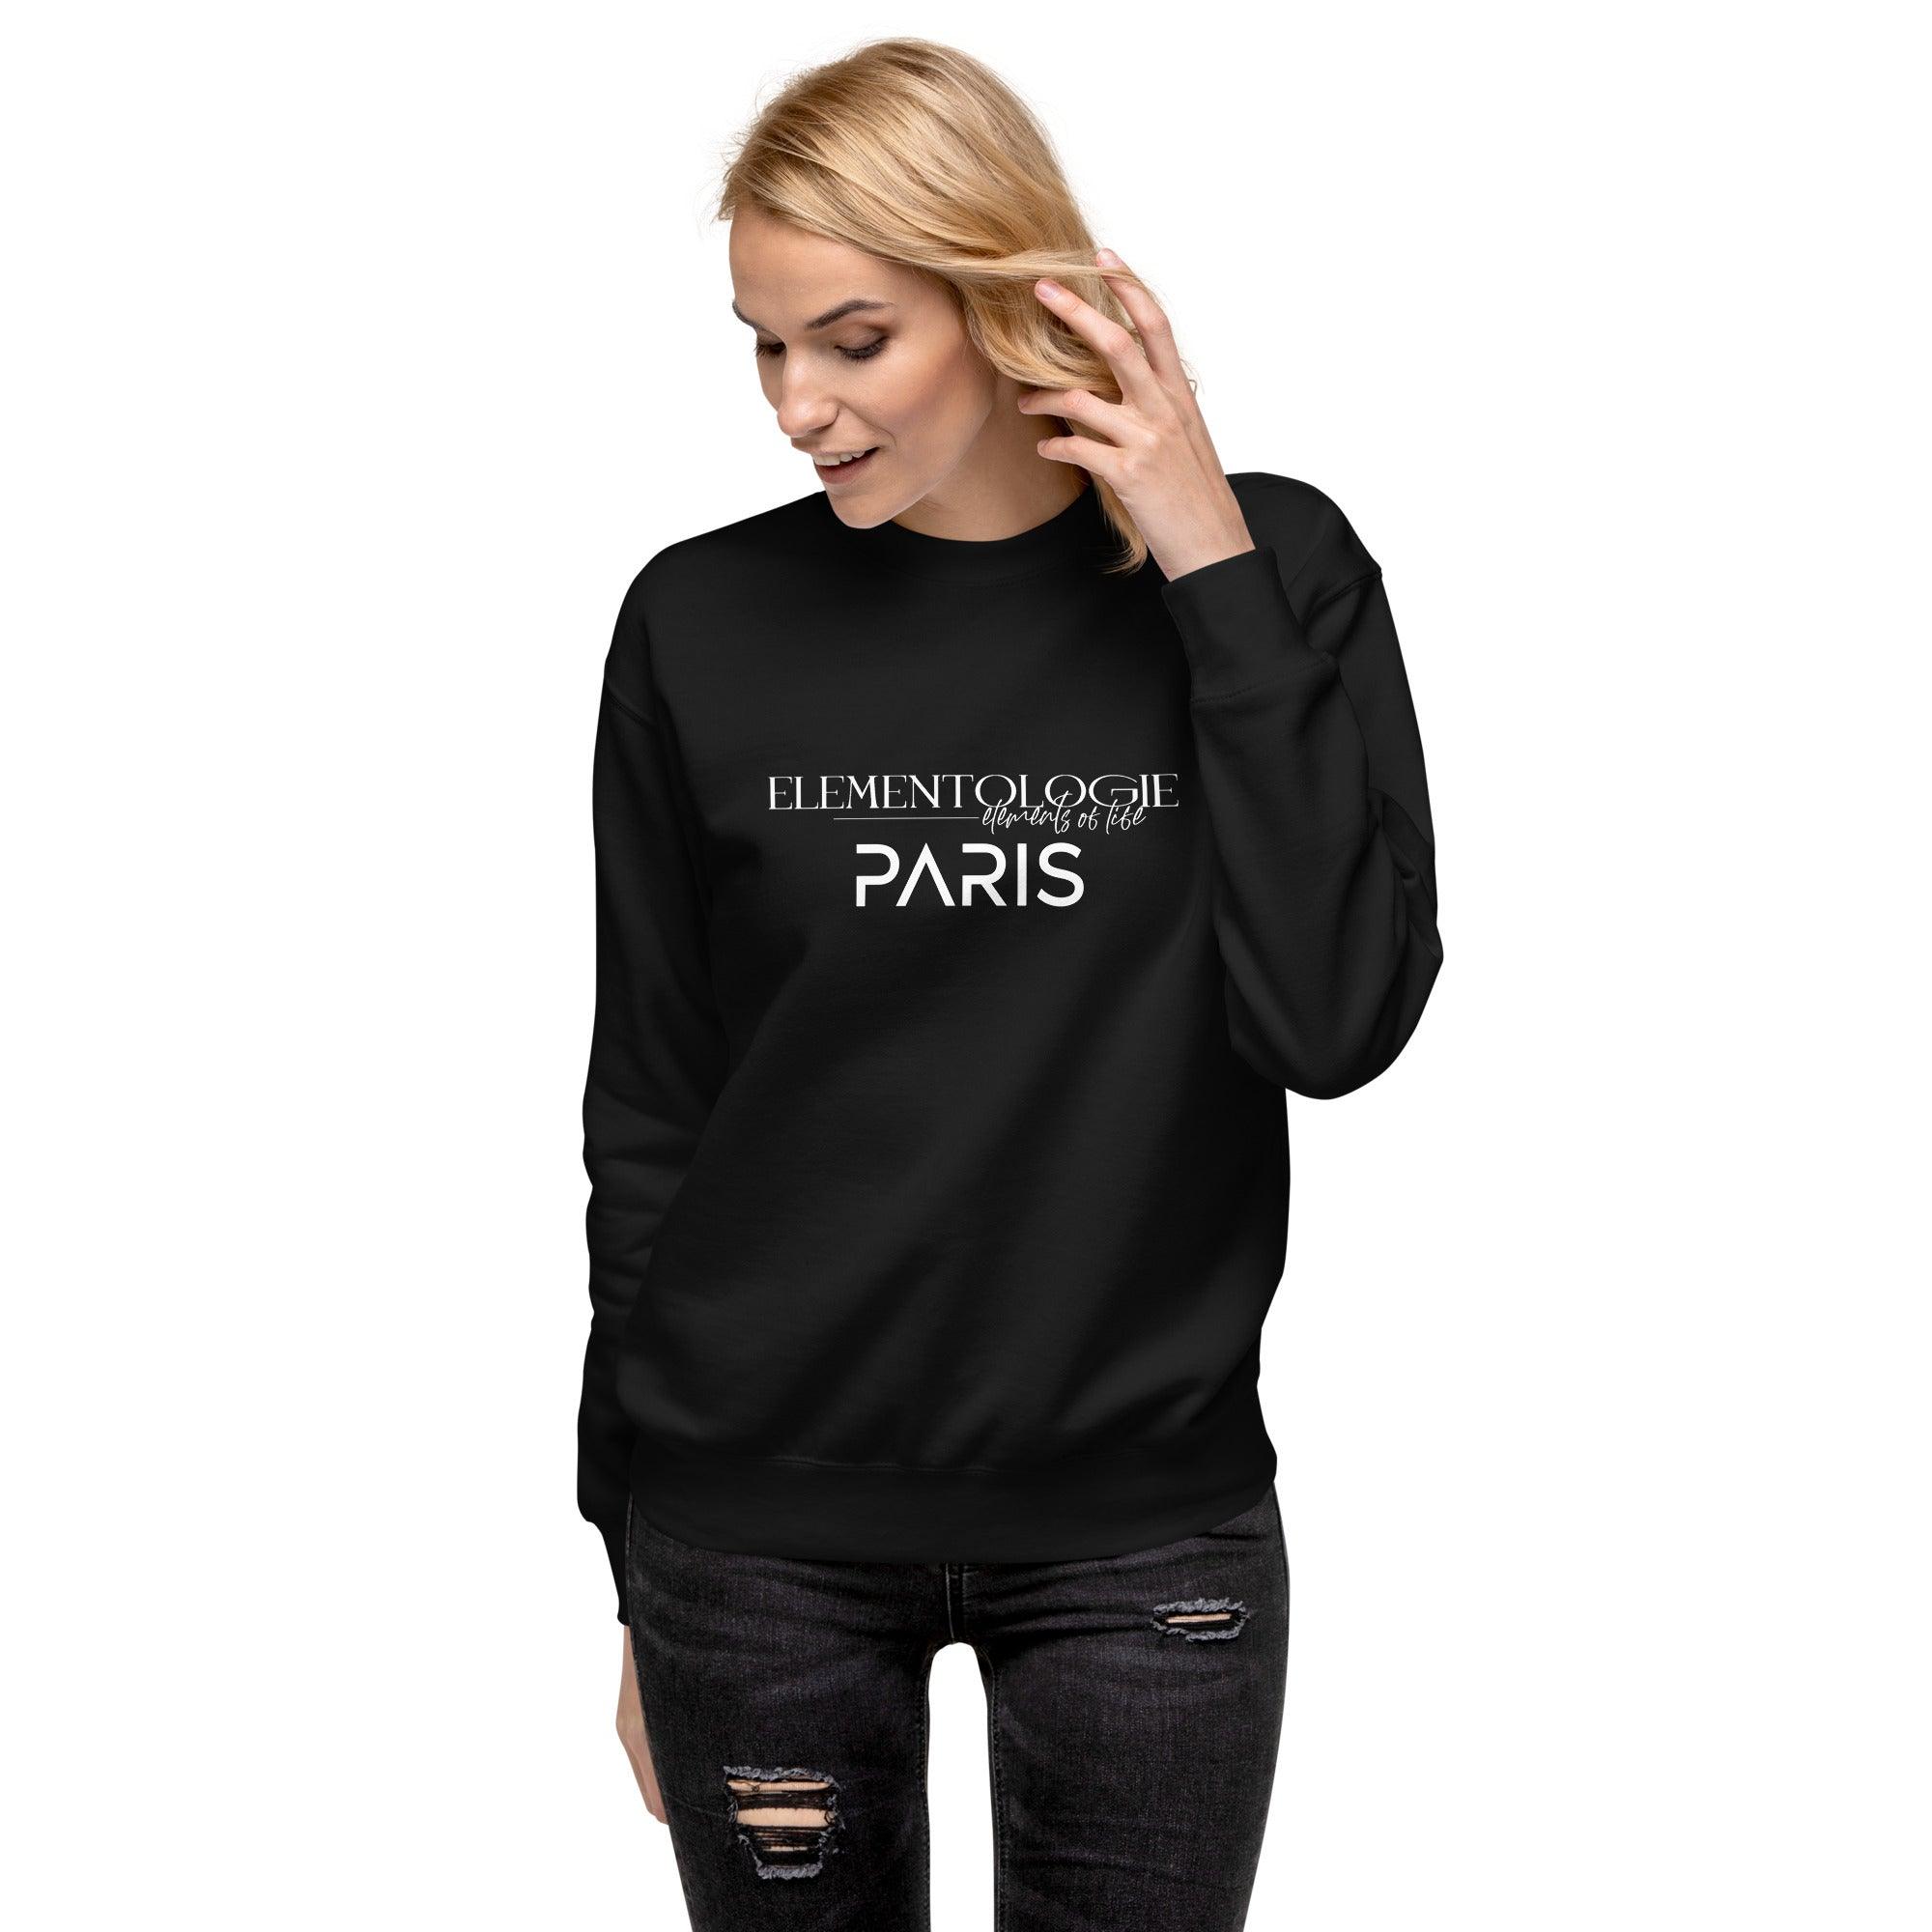 Unisex Premium Sweatshirt-Elementologie-Paris - Elementologie